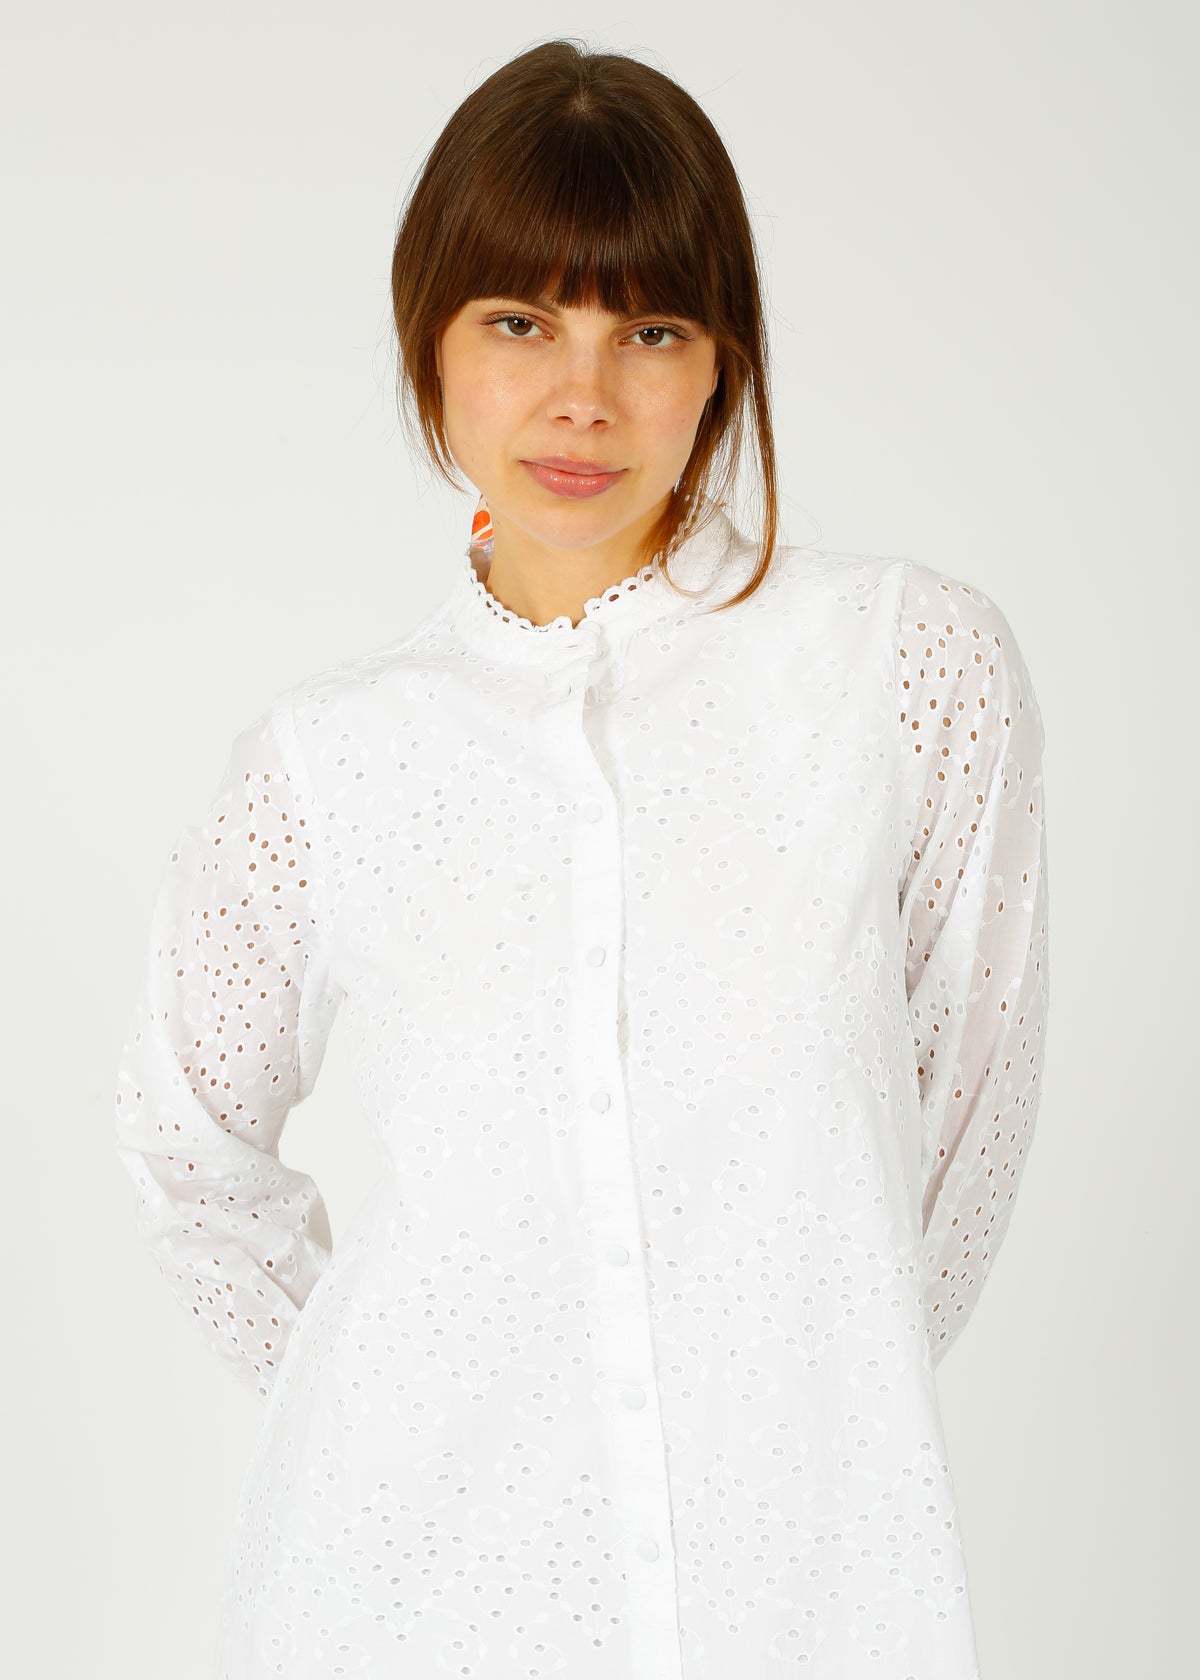 SLF Tatiana Embroidered Dress in White